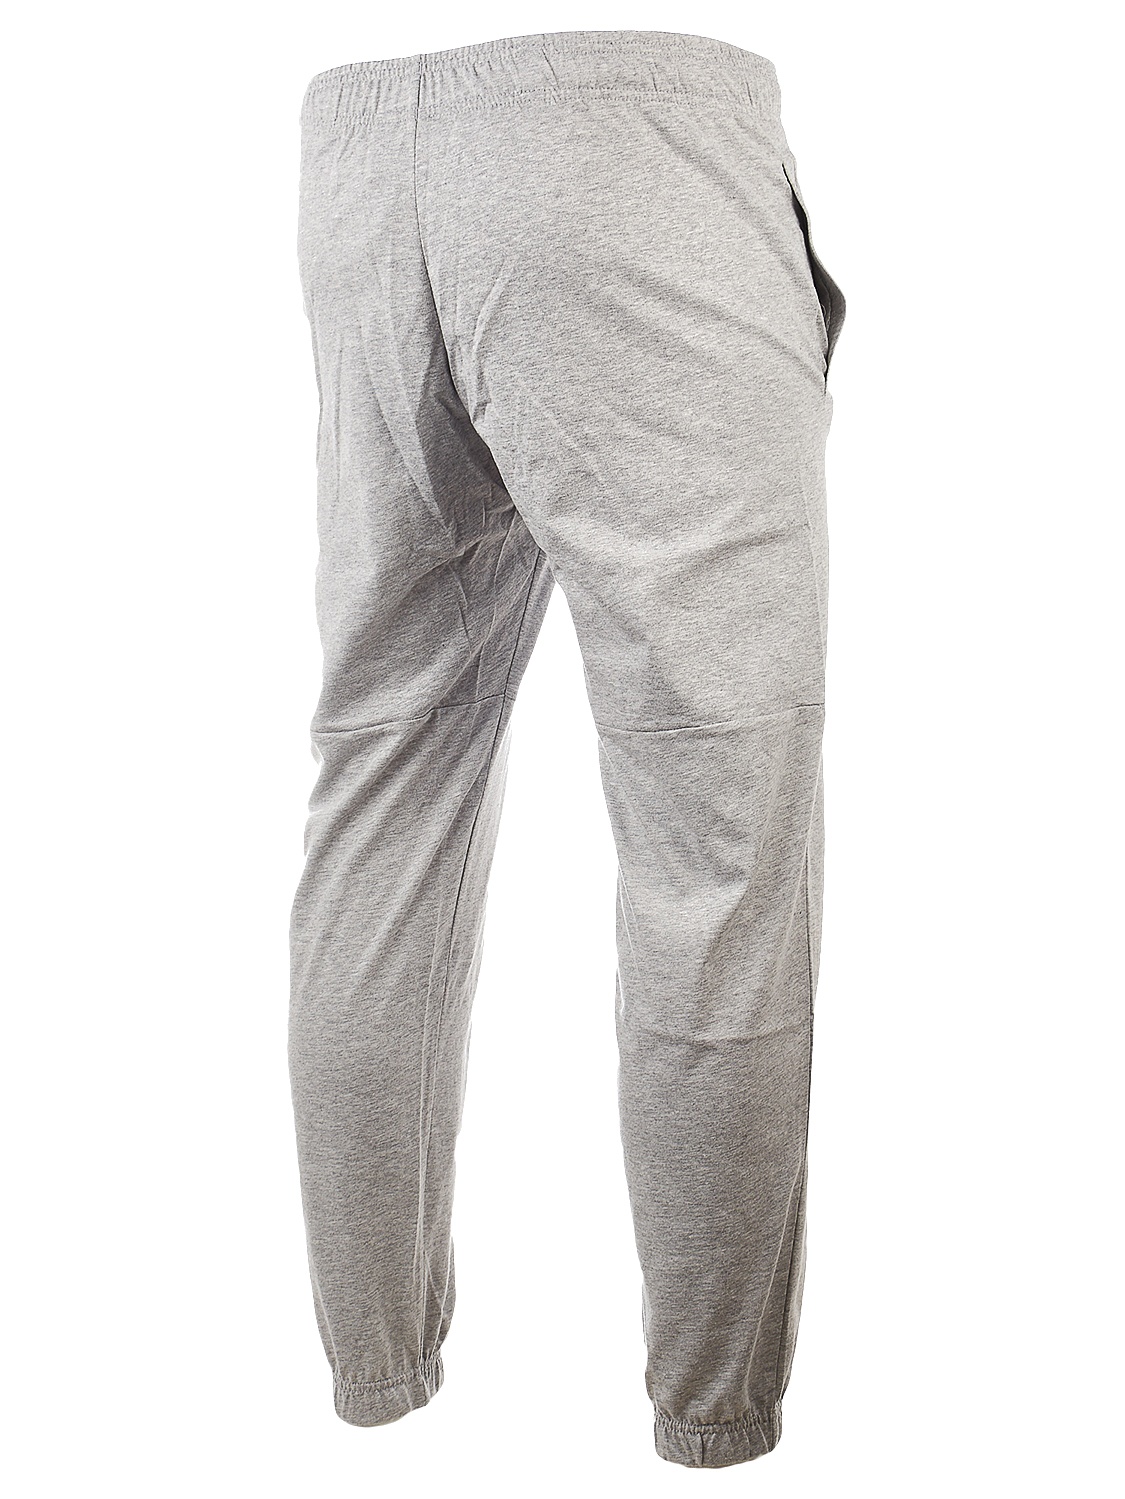 Adidas Essentials Performance Logo Pants - Medium Grey Heather/White/Black - Mens - XL - image 2 of 3